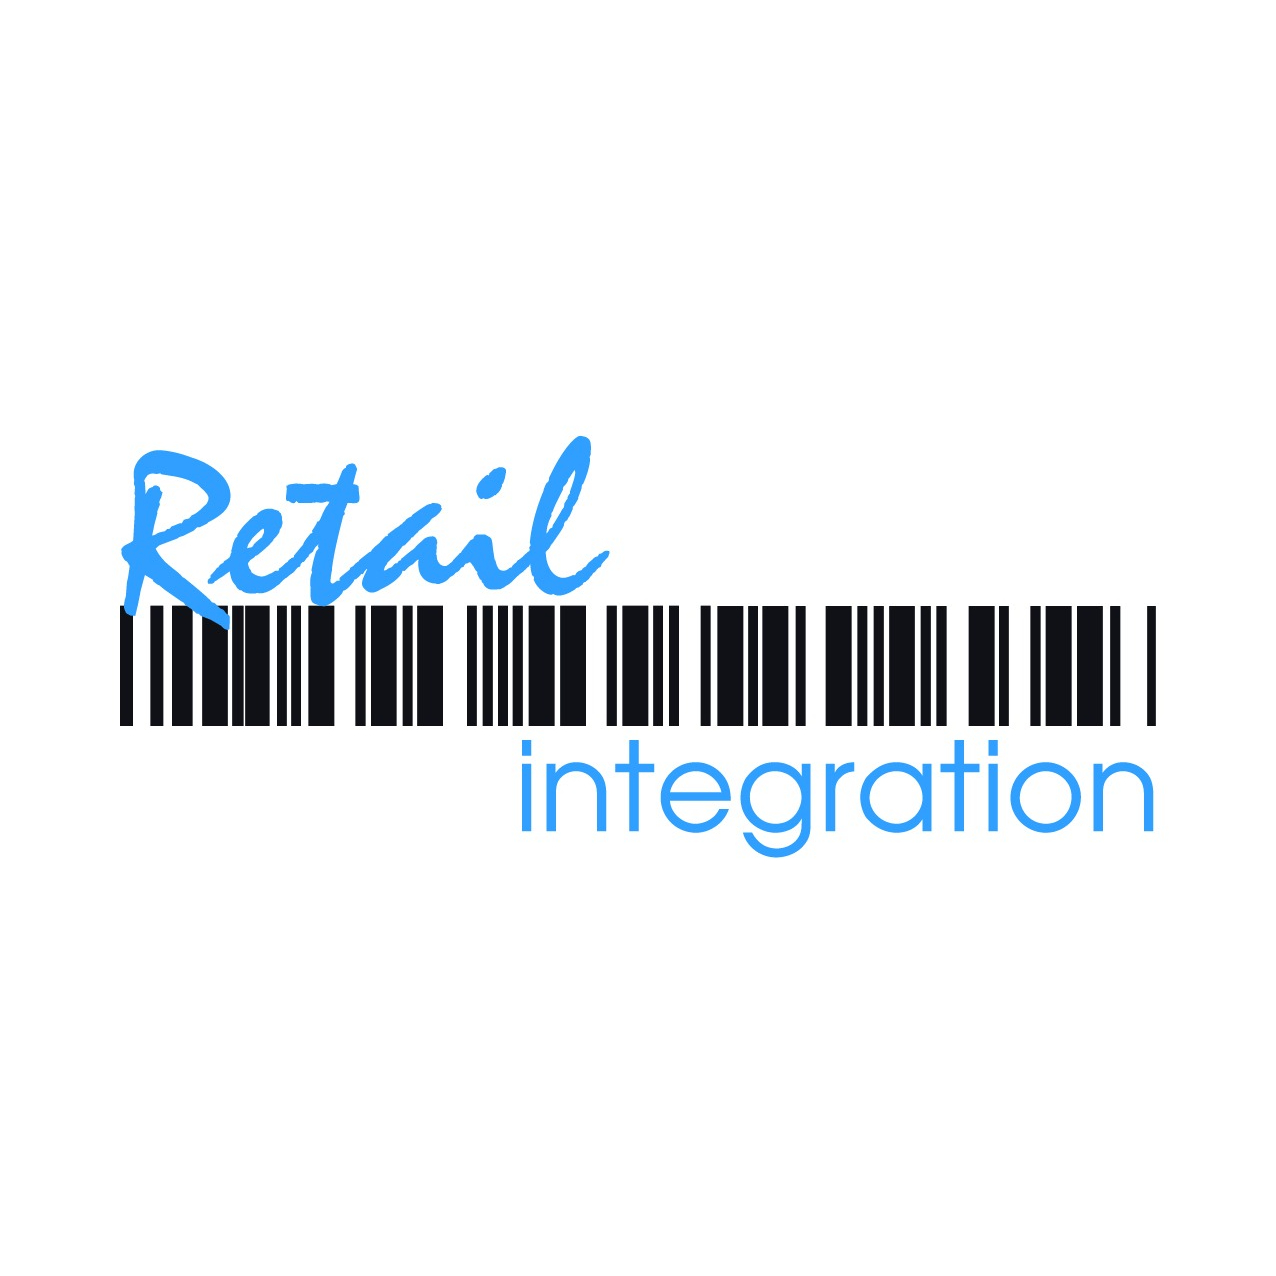 Retail_Integration_logo